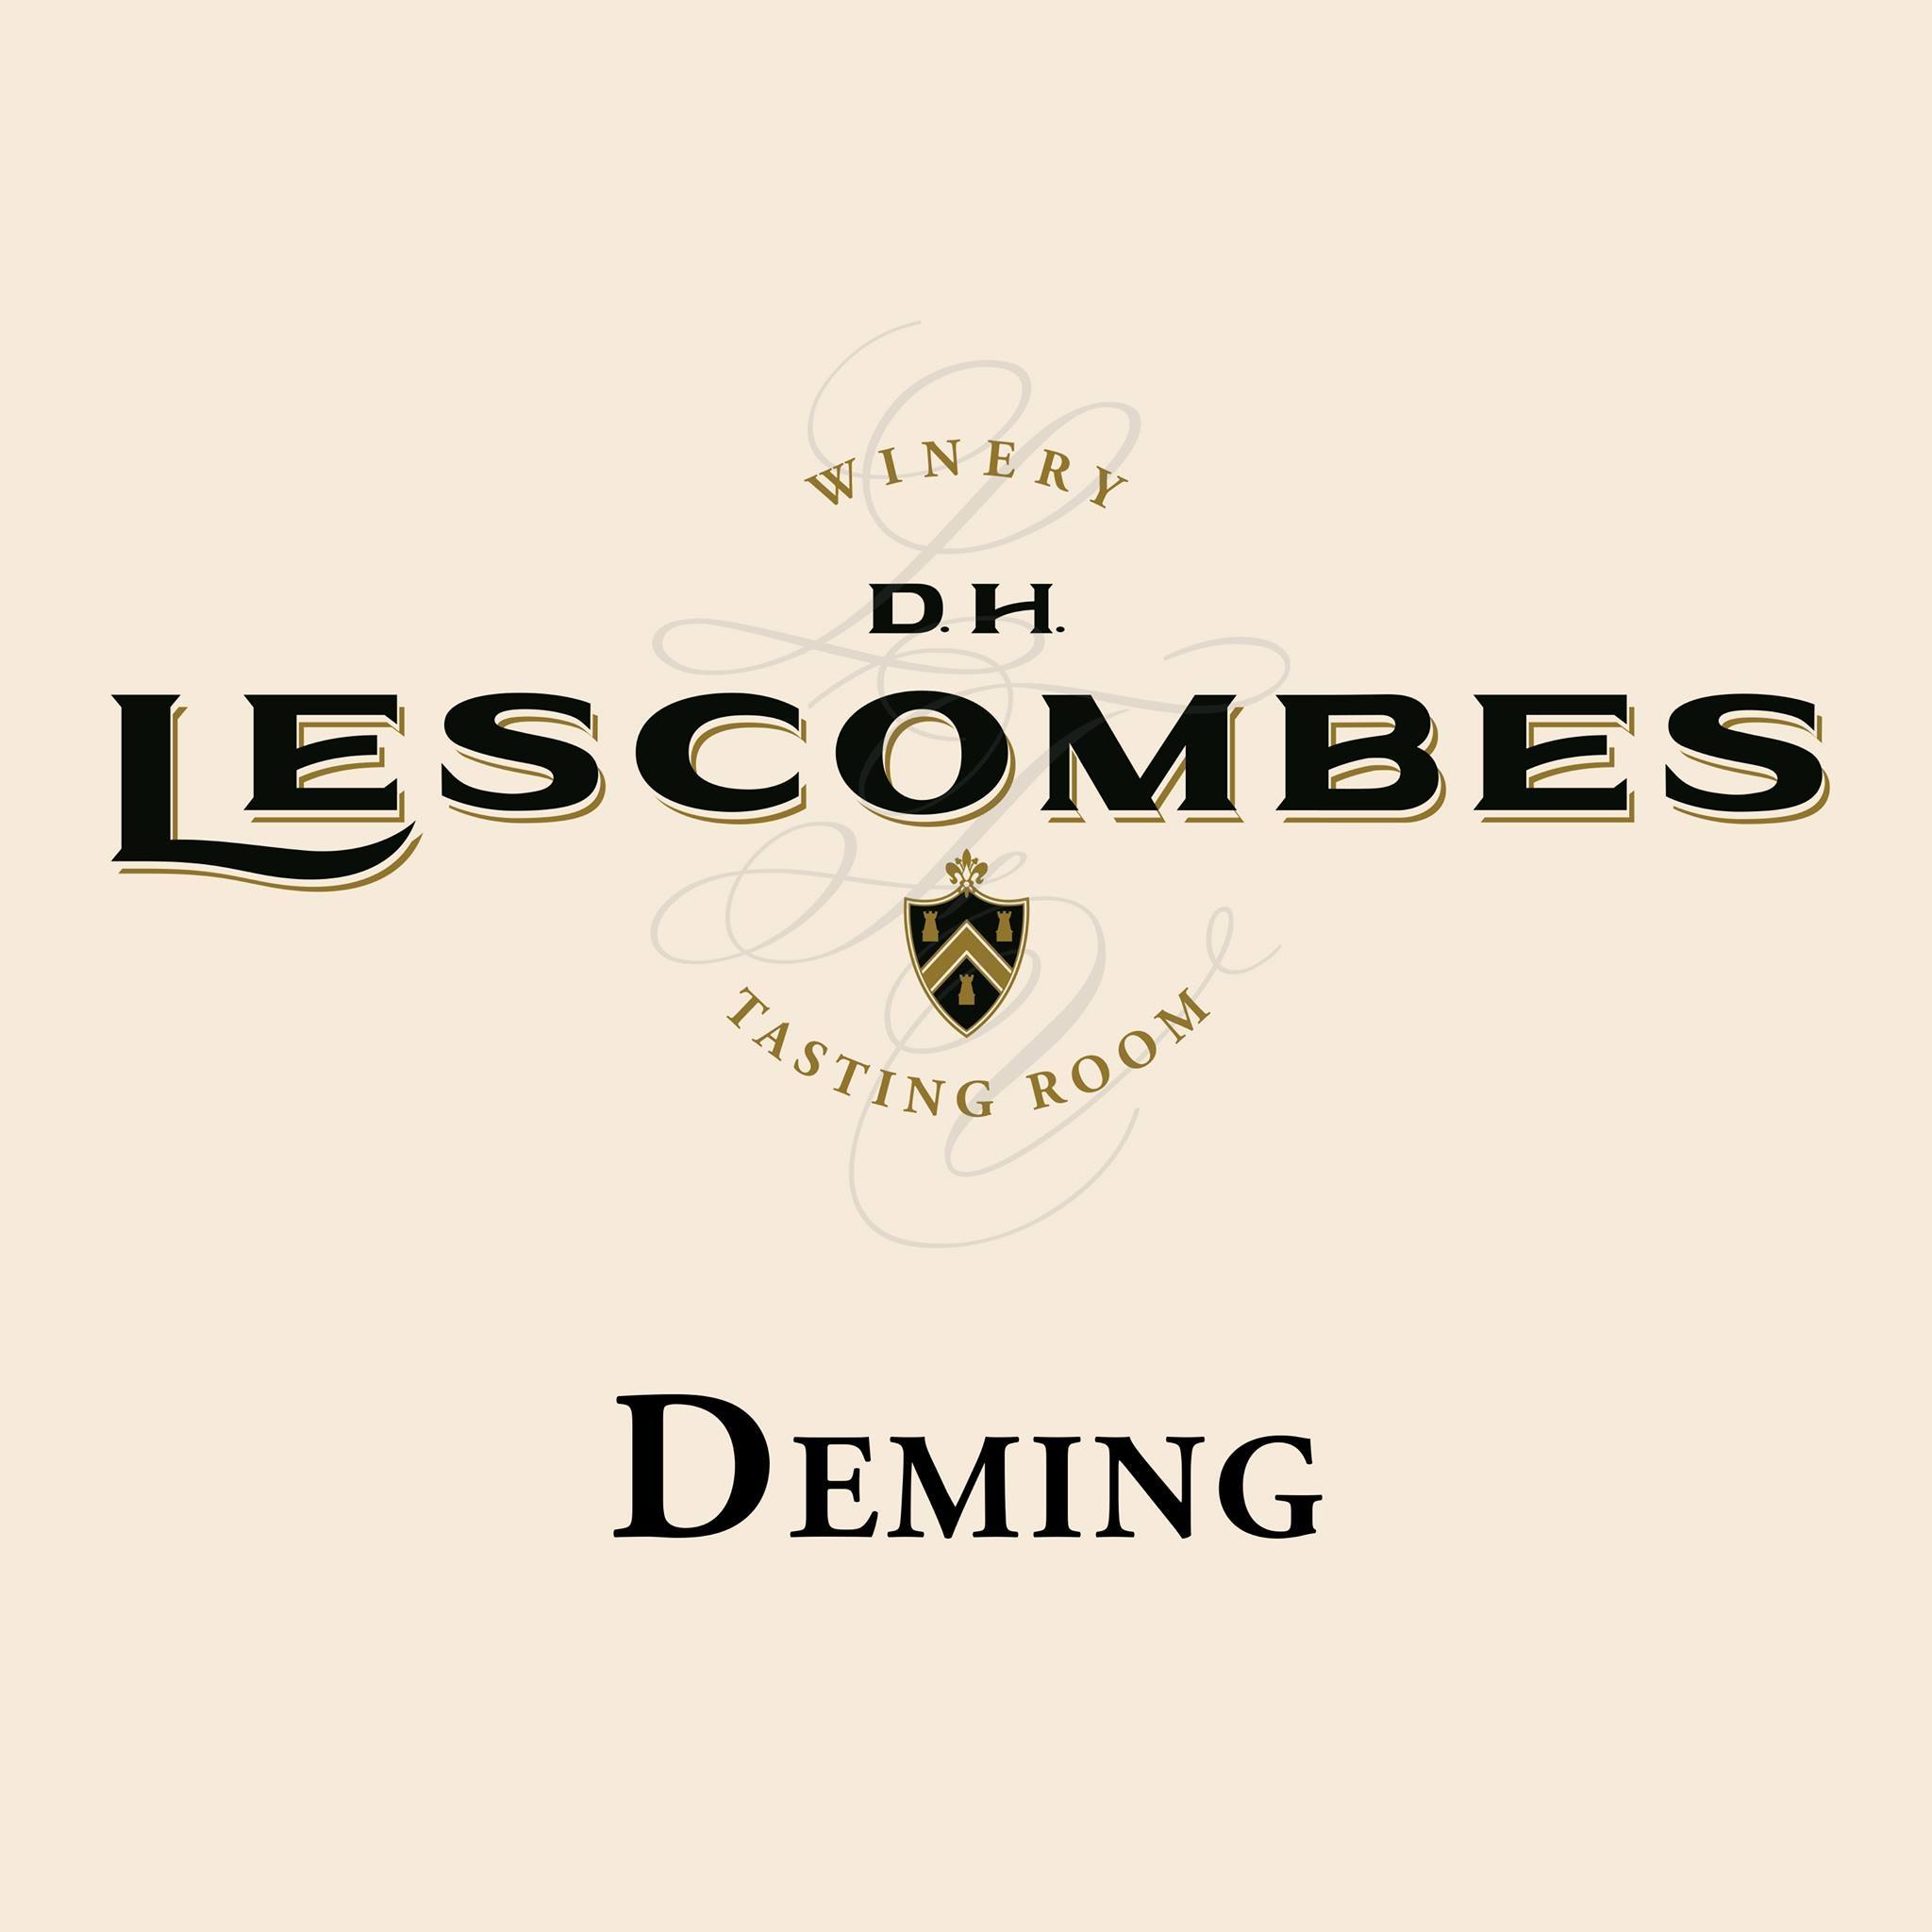 D.H. Lescombes Tasting Room